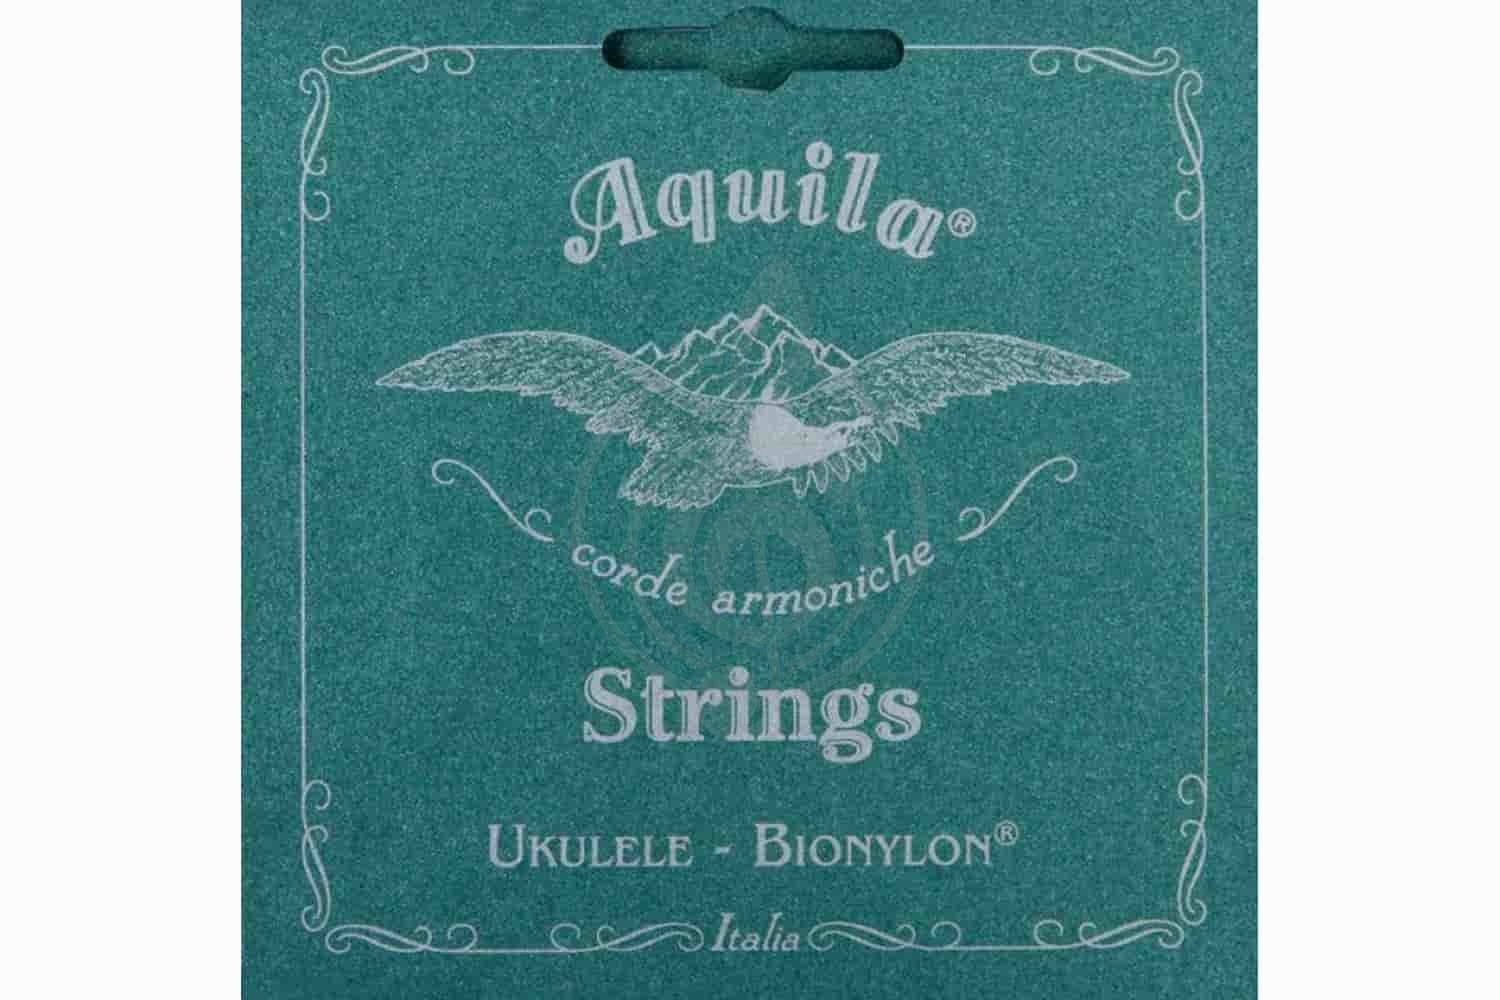 Струны для укулеле концерт Струны для укулеле концерт Aquila AQUILA 60U - Струны для укулеле концерт концерт 60U - фото 1